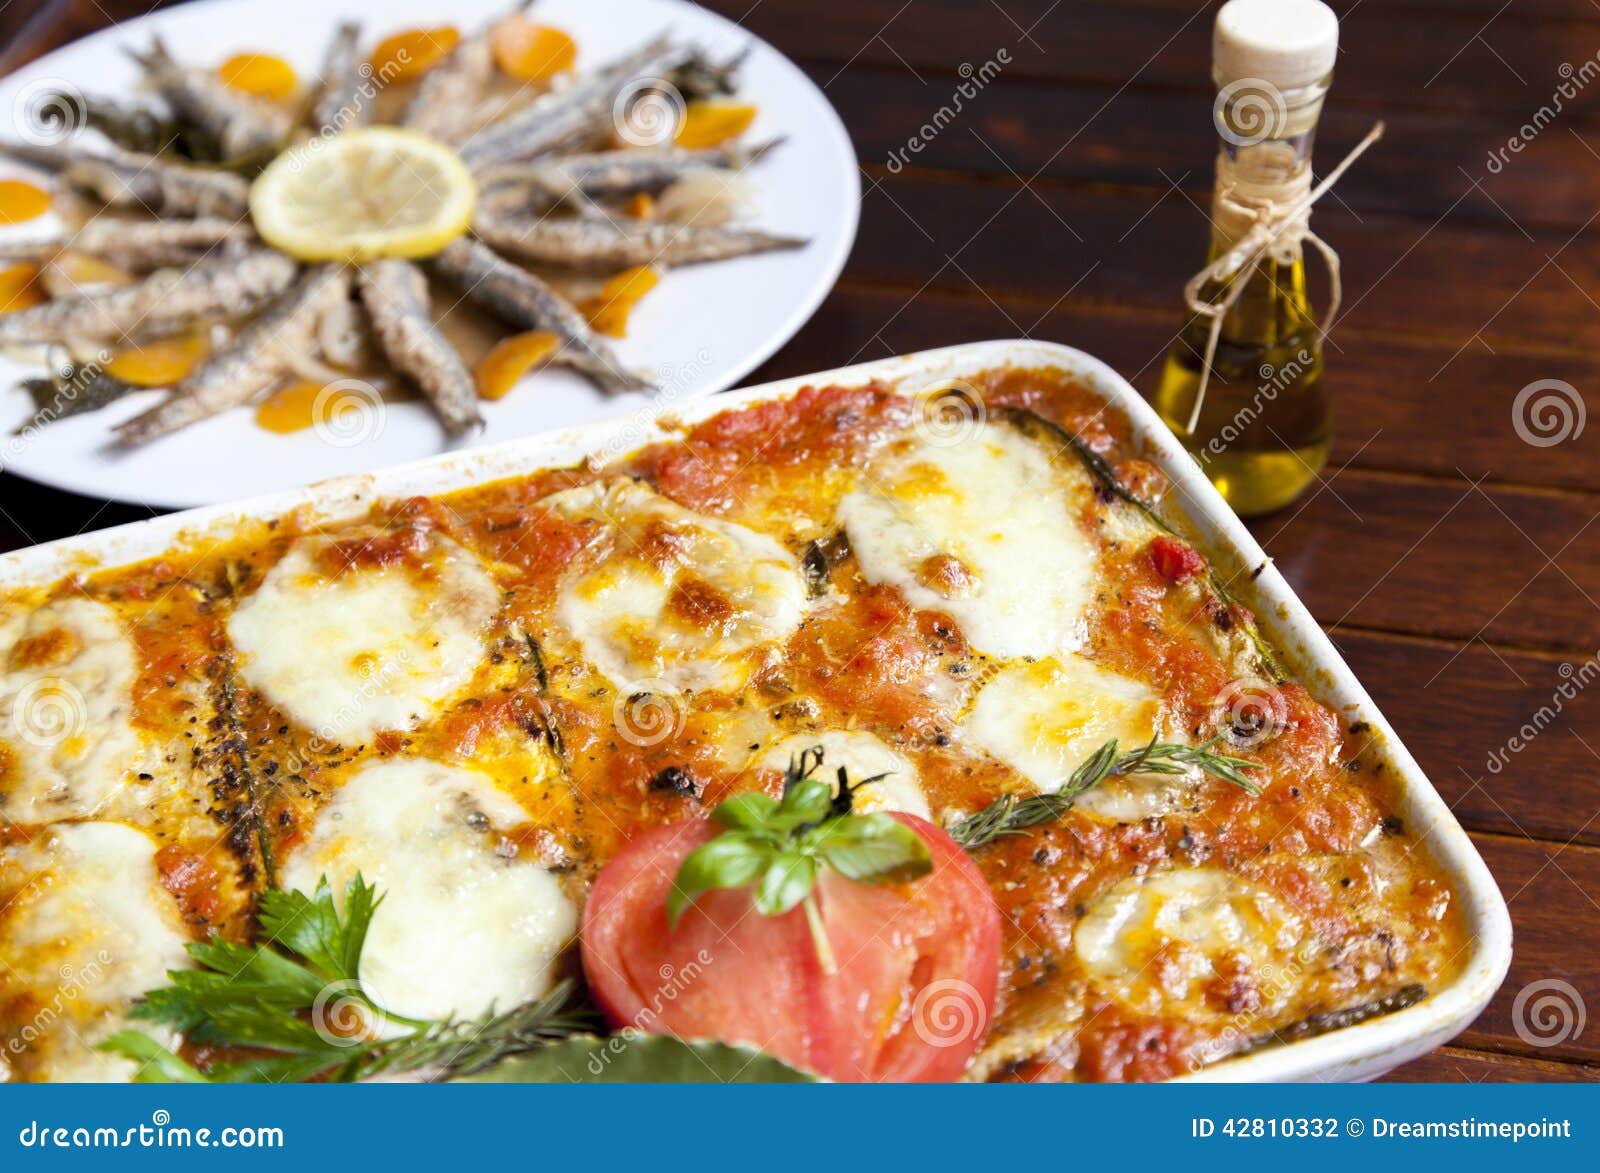 melanzane alla parmigiana and marinated sardines